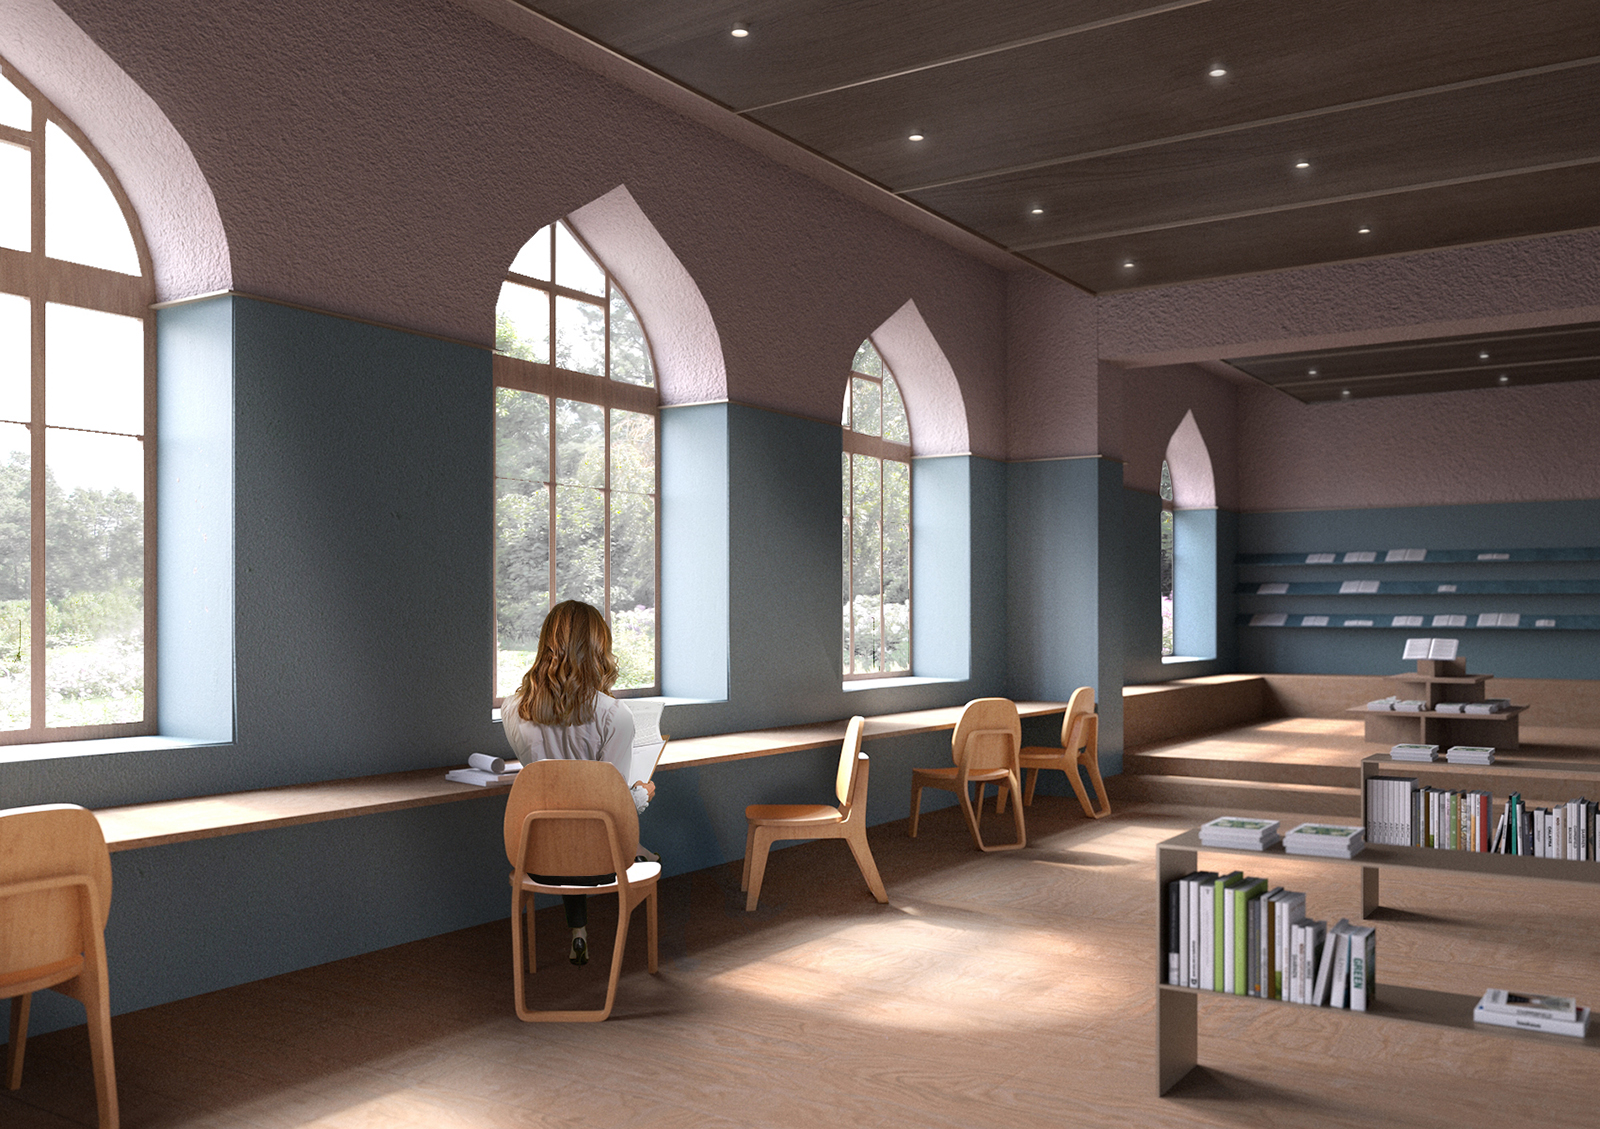 Archisearch Εξαγορά της πρότασης των Nysa Architects για τον πρόσφατο Πανελλήνιο Αρχιτεκτονικό Διαγωνισμό «Αξιοποίηση του οικοπέδου Σαρλίτζα με δημιουργία κέντρου θερμαλισμού και πολιτιστικού συγκροτήματος»